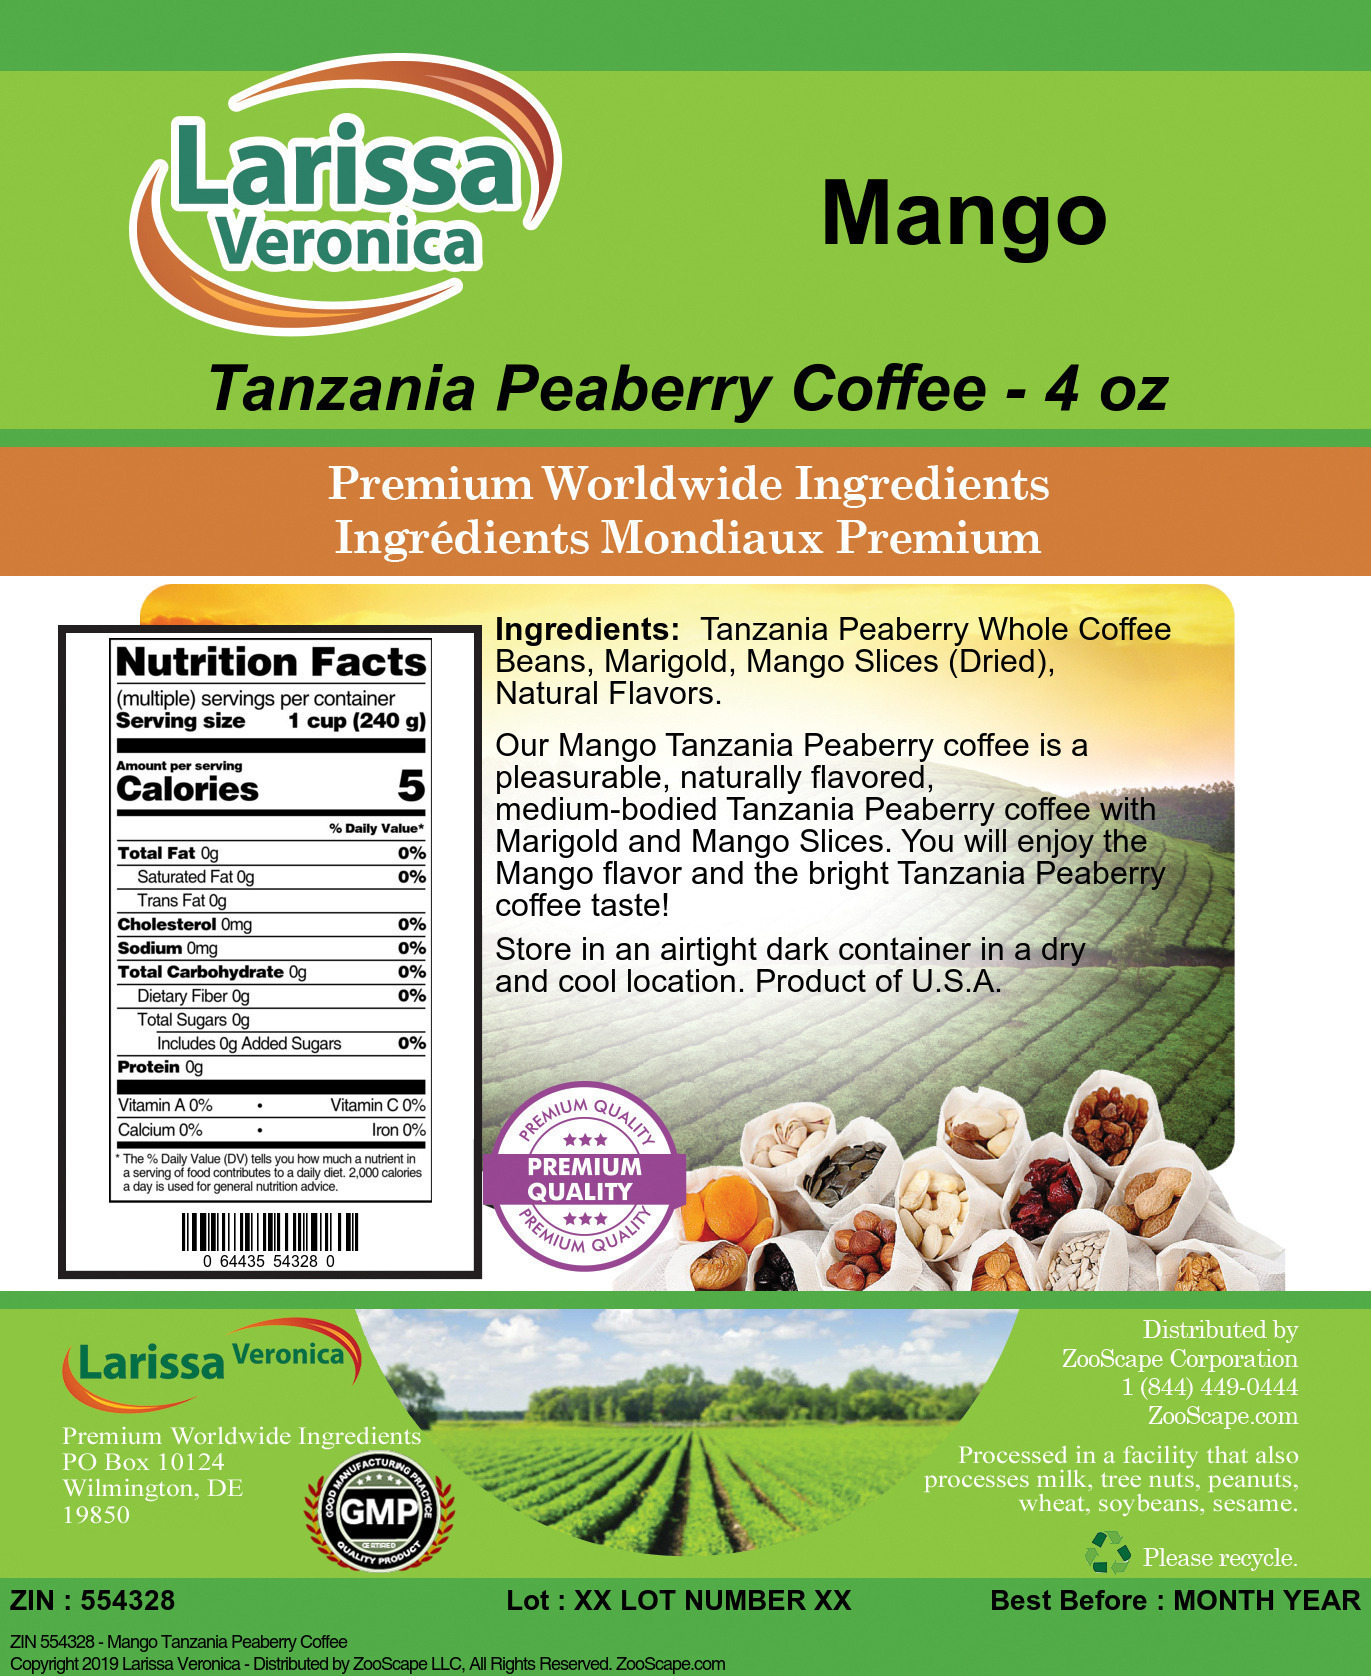 Mango Tanzania Peaberry Coffee - Label